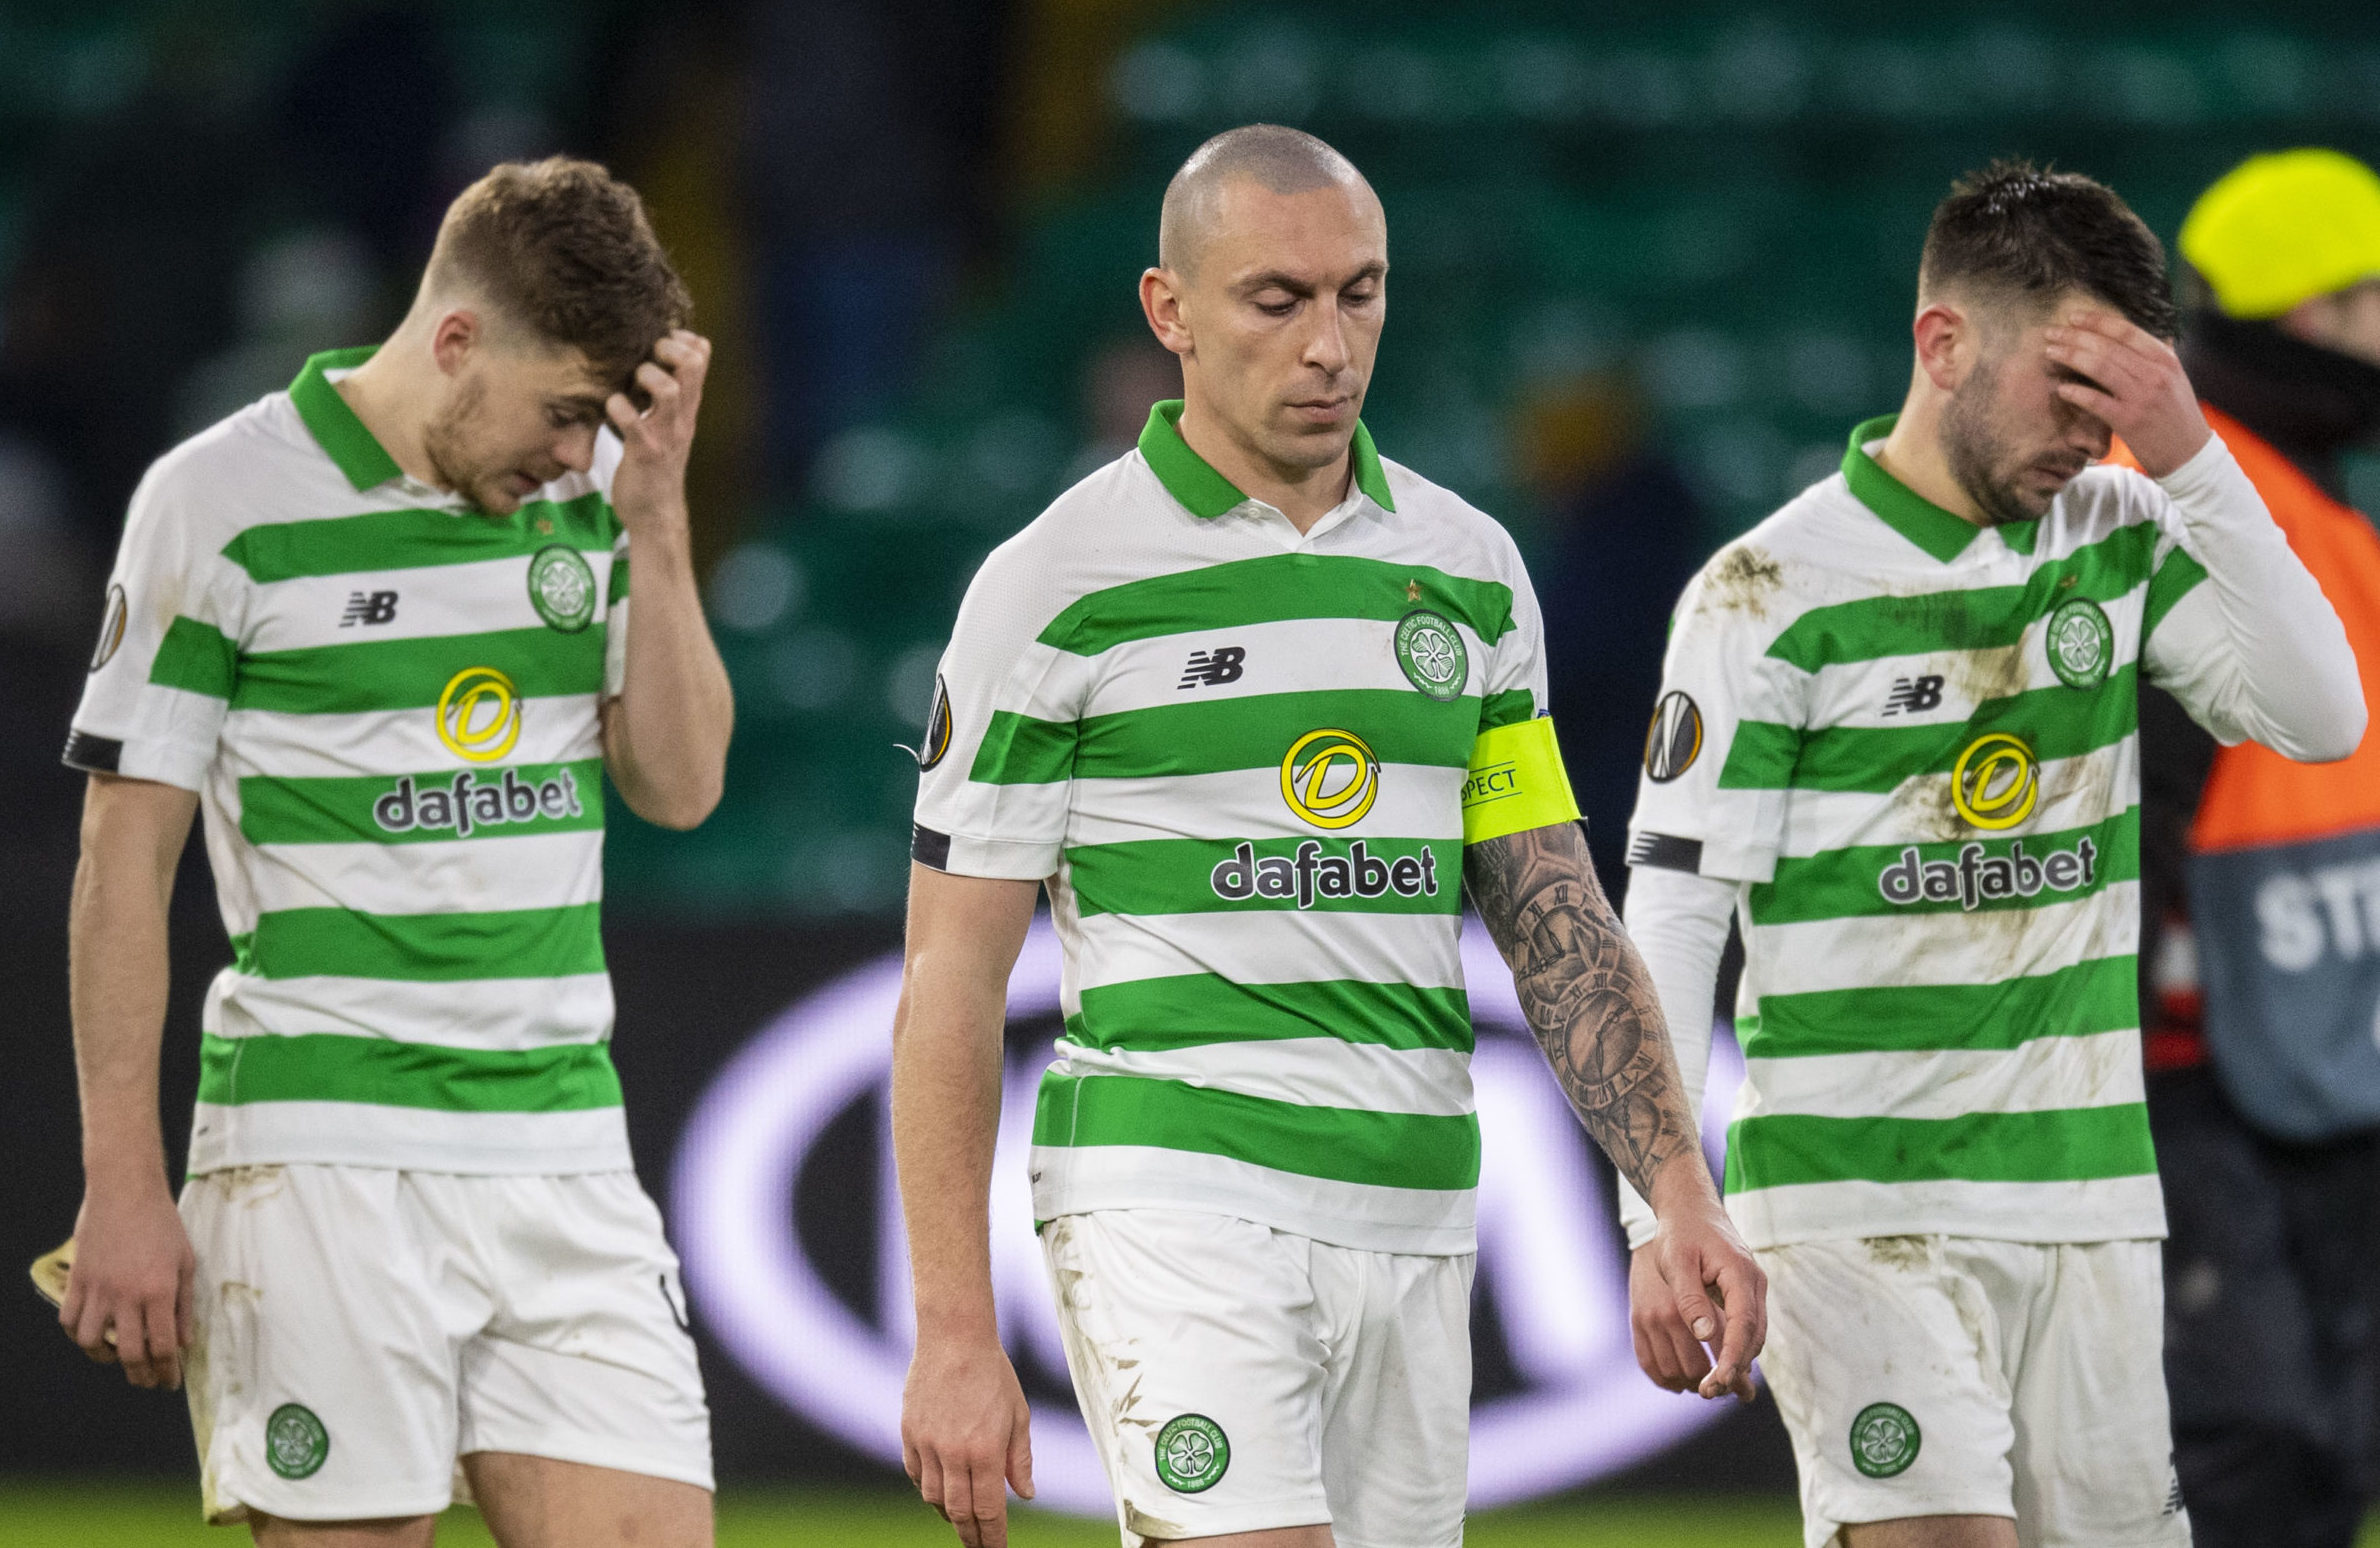 Celtic's James Forrest, Scott Brown and Greg Taylor trudge off after defeat to Copenhagen